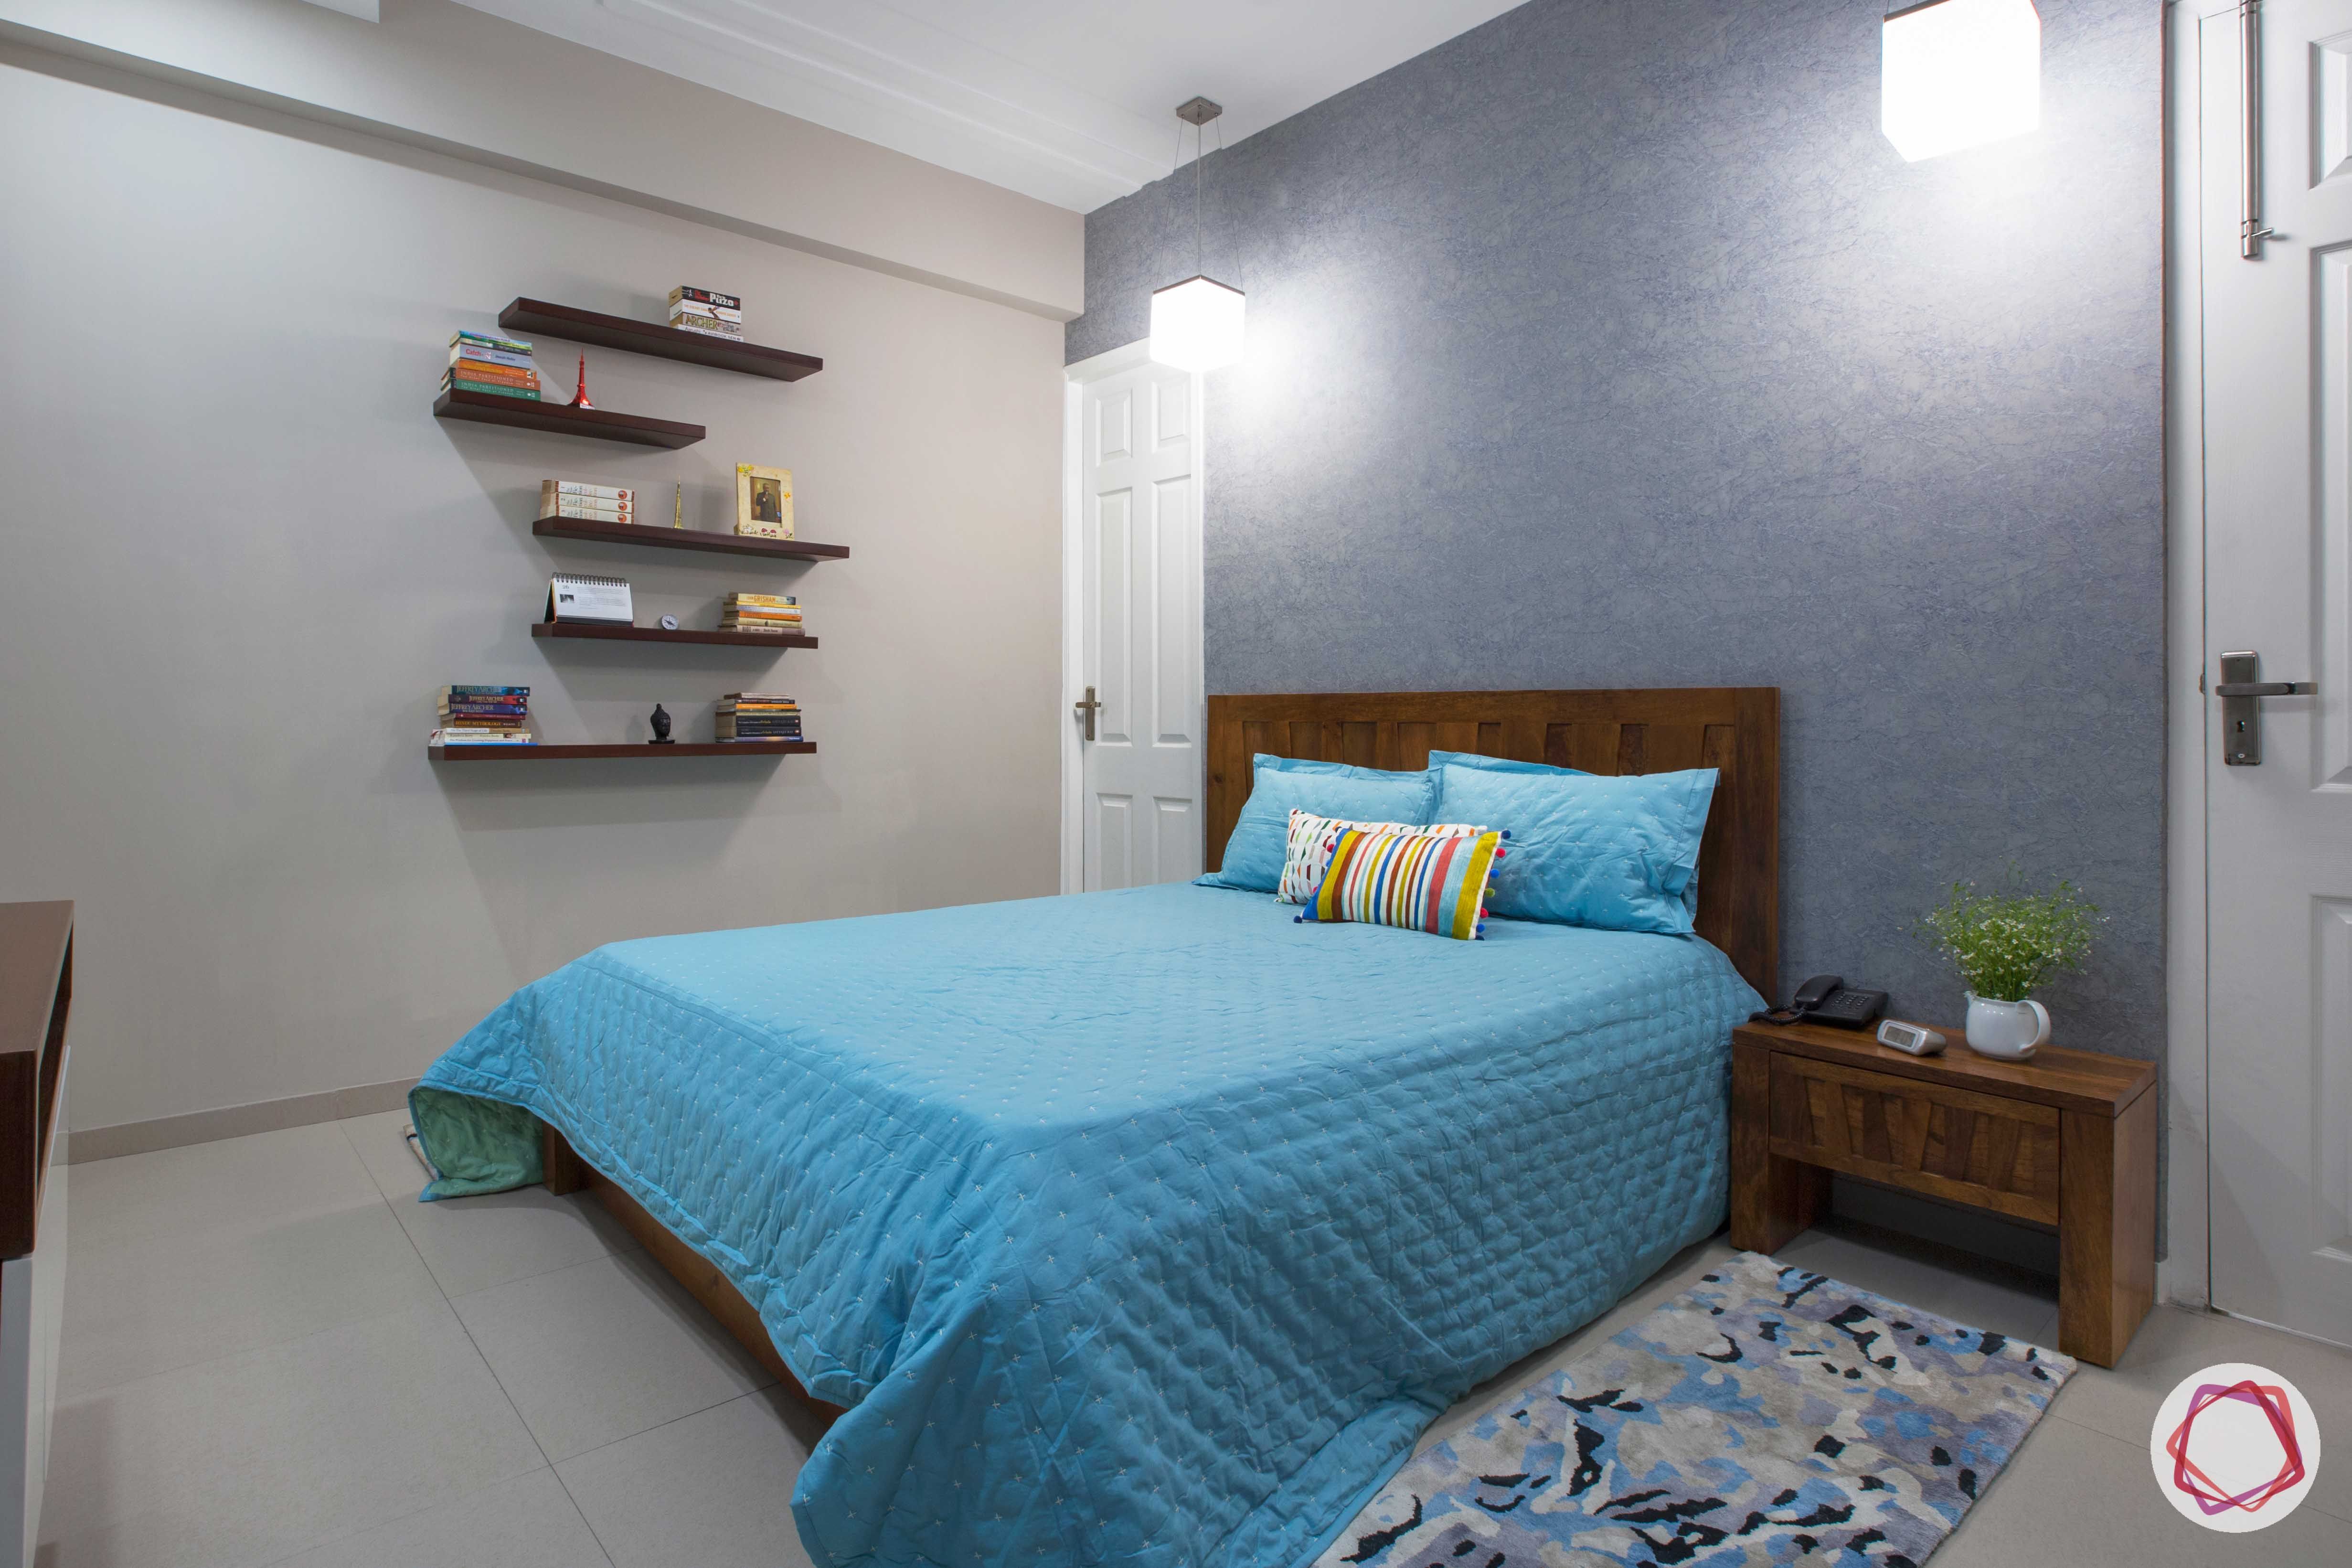 Prateek Stylome-blue wall paint ideas-wooden shelves designs